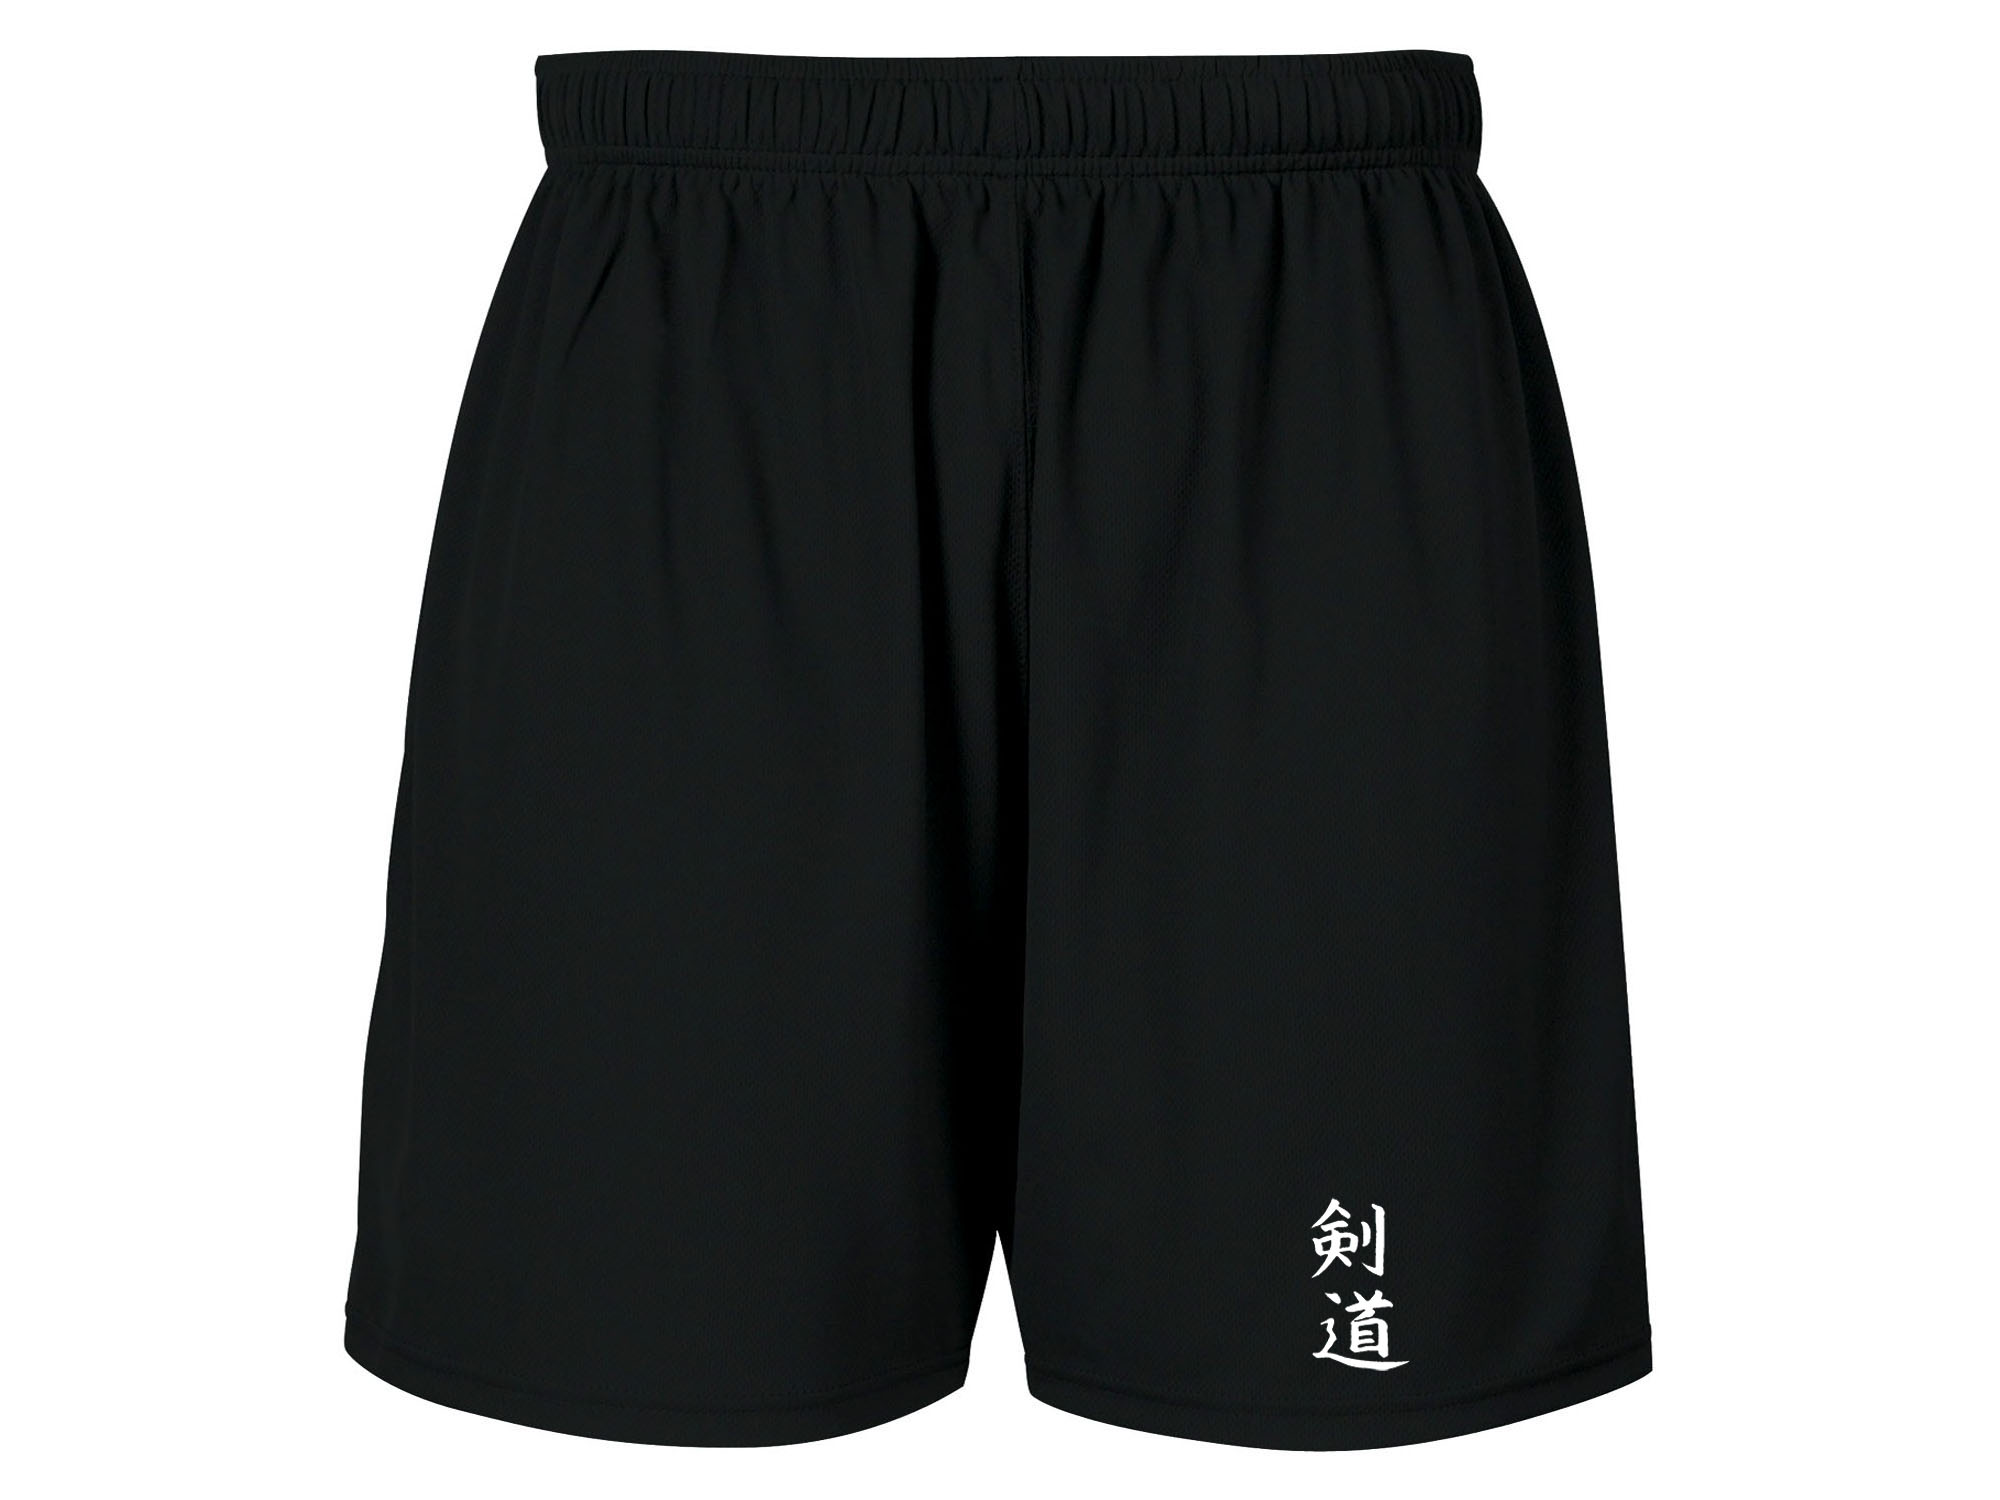 Kendo Kanji writing moisture wicking fabric black workout shorts